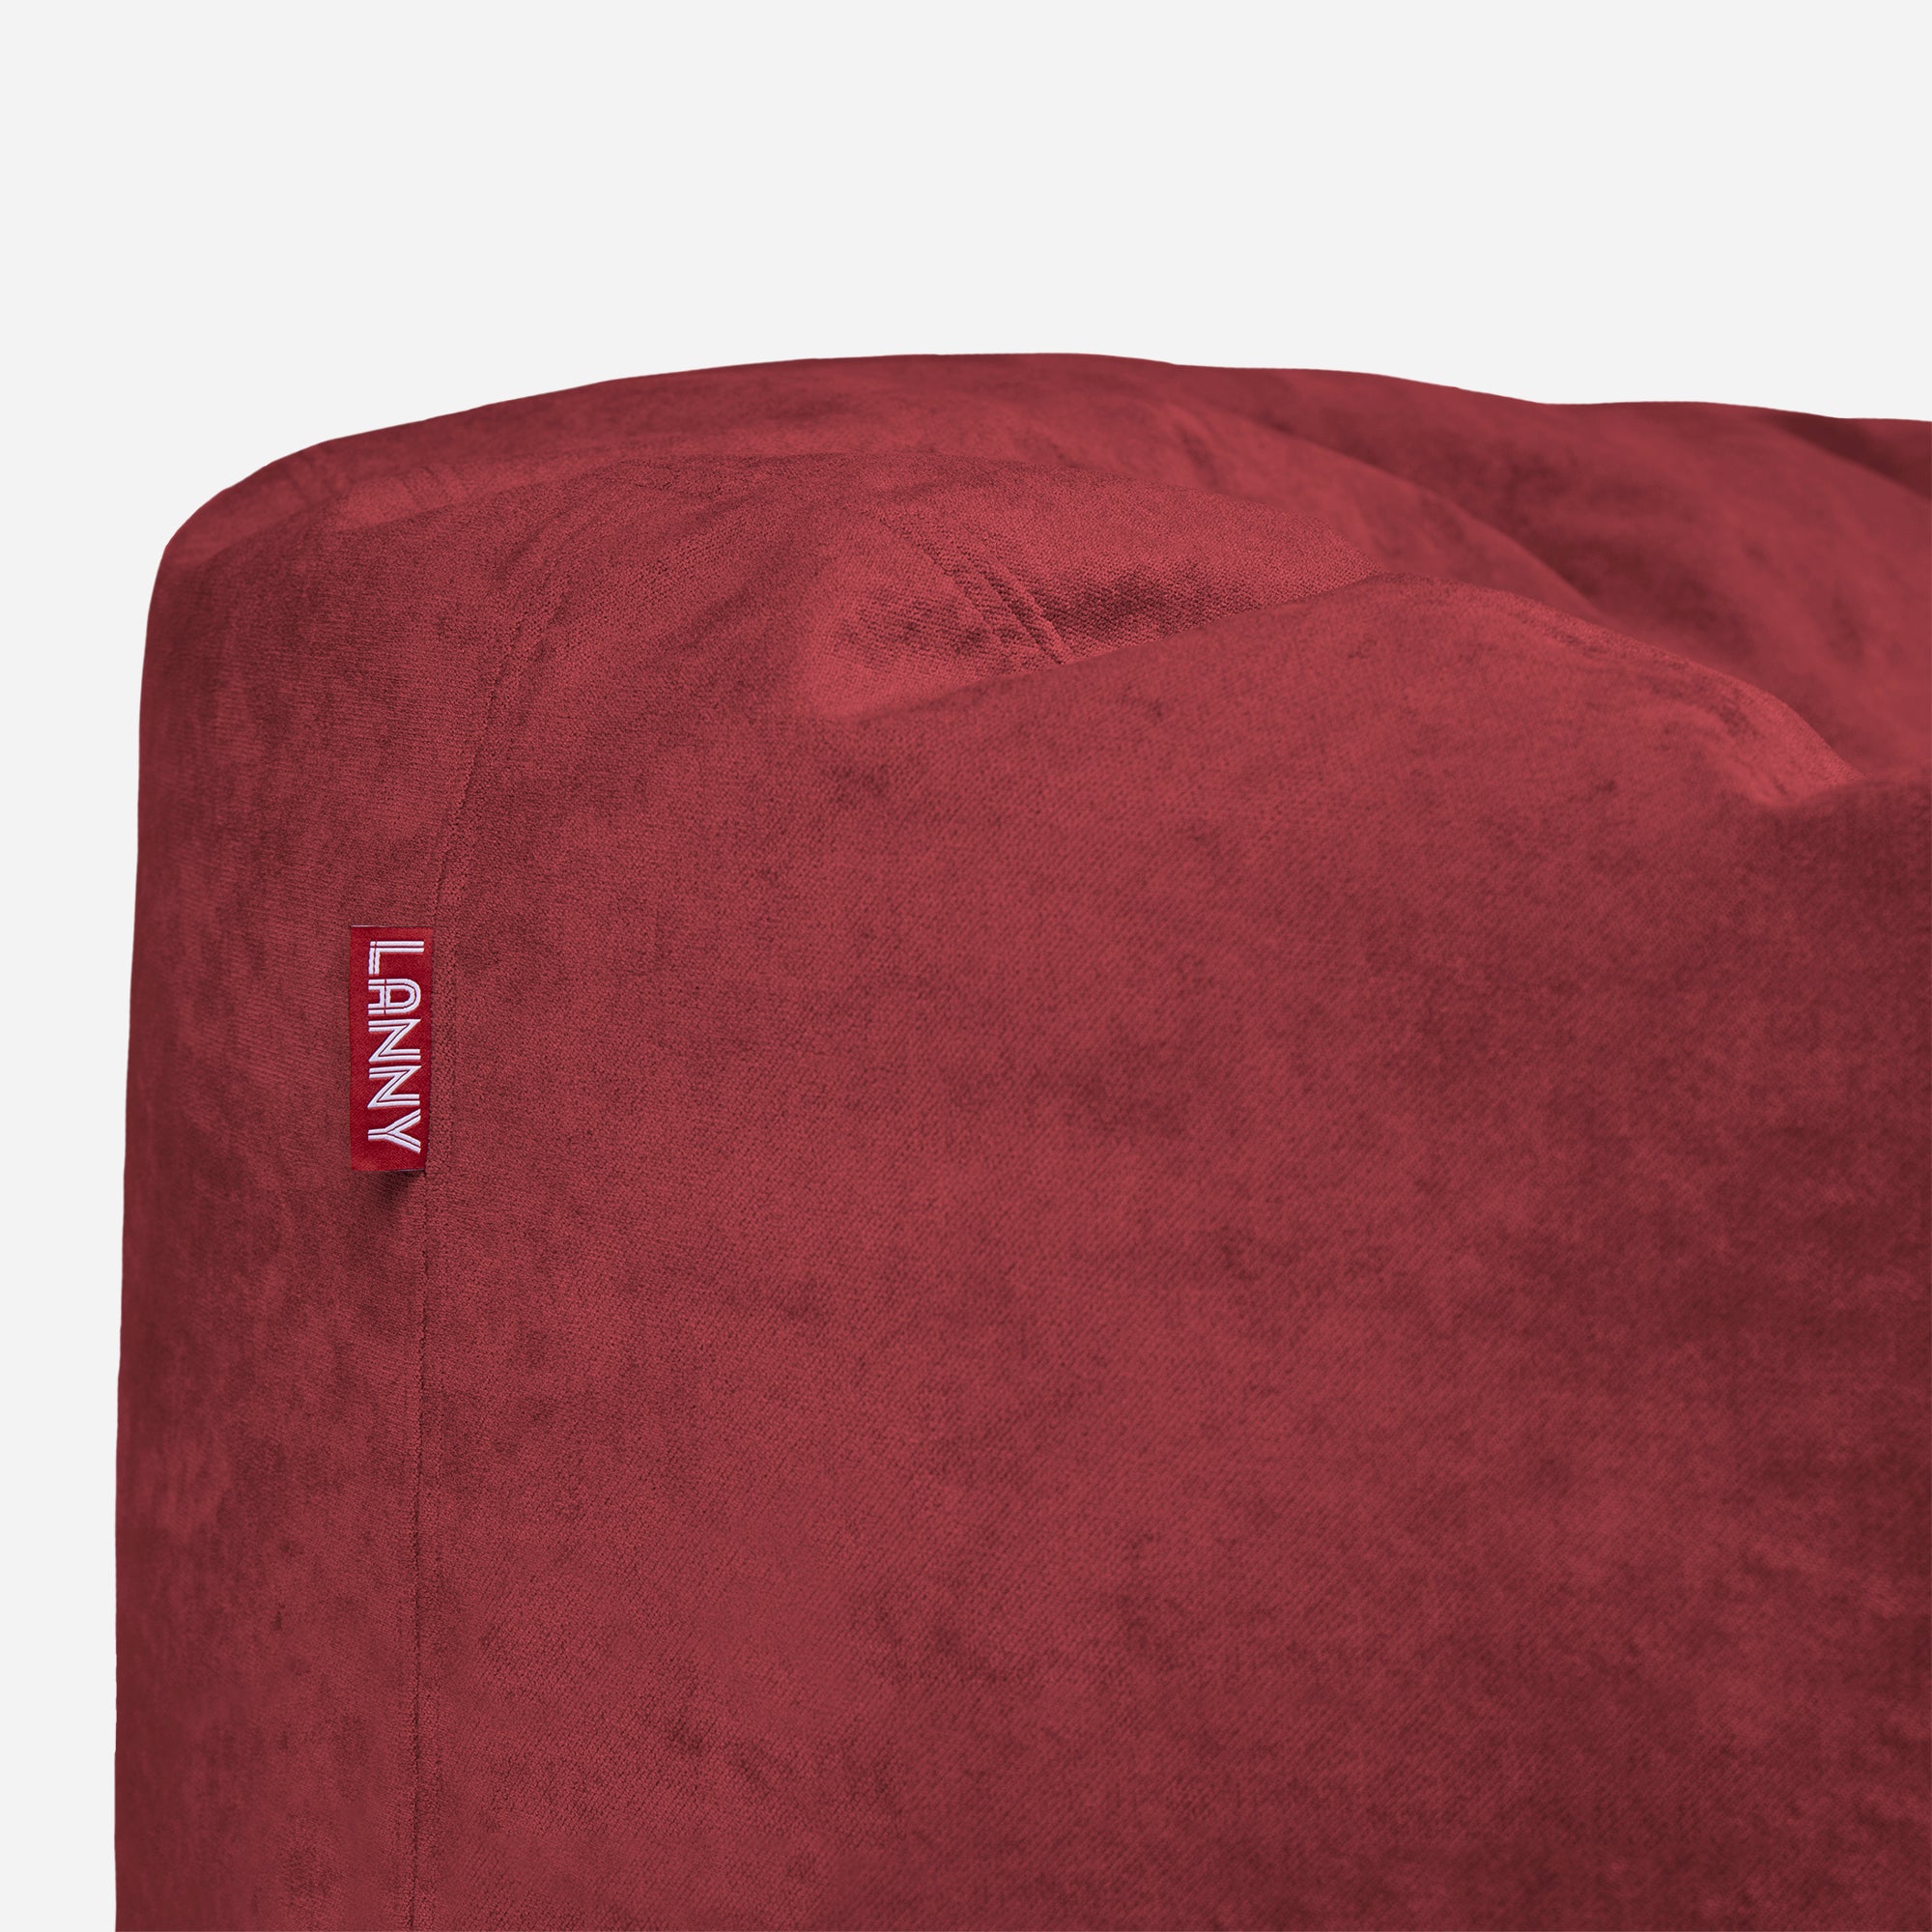 Medium Original Aldo Red Bean Bag